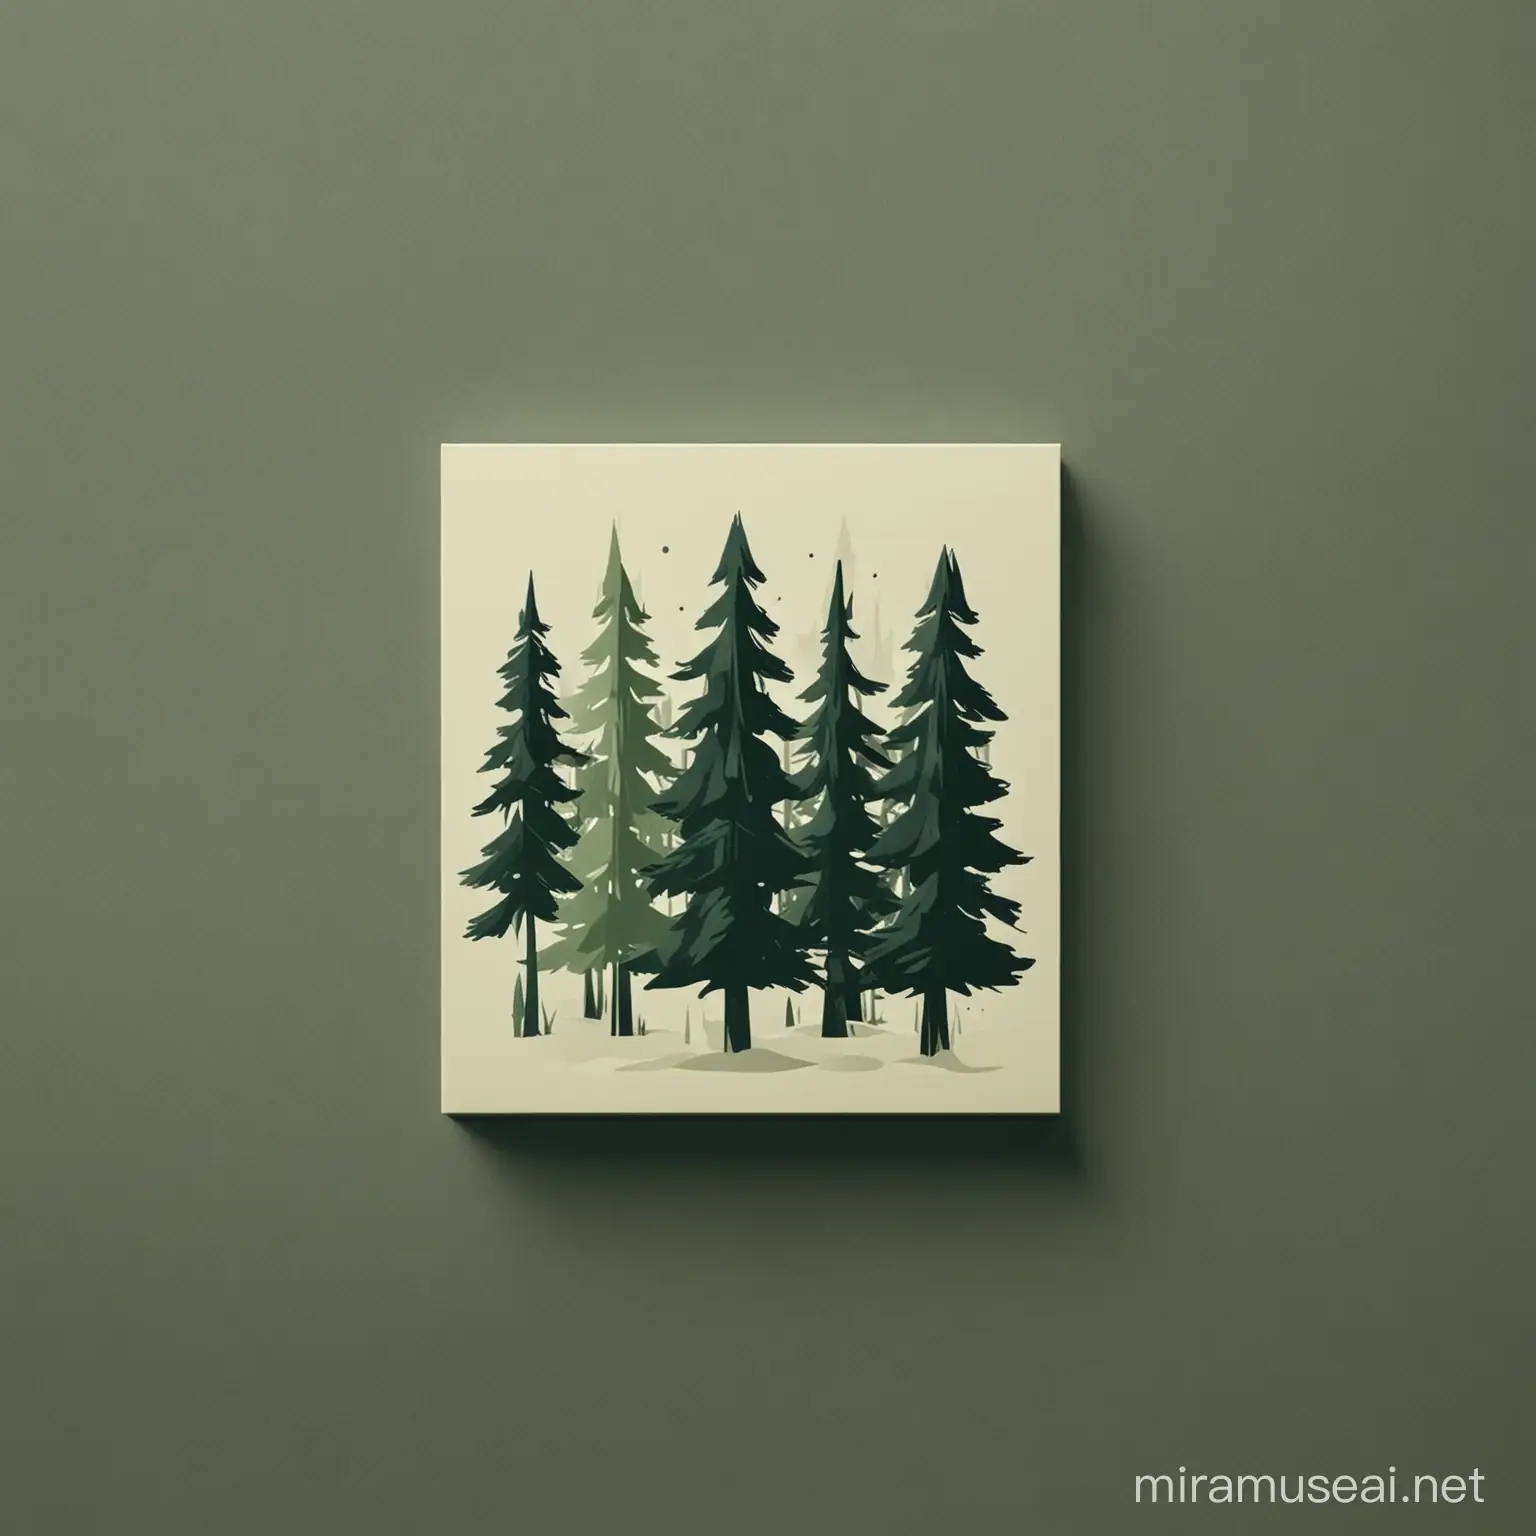 Minimalist Pine Forest Logo in Green Tones